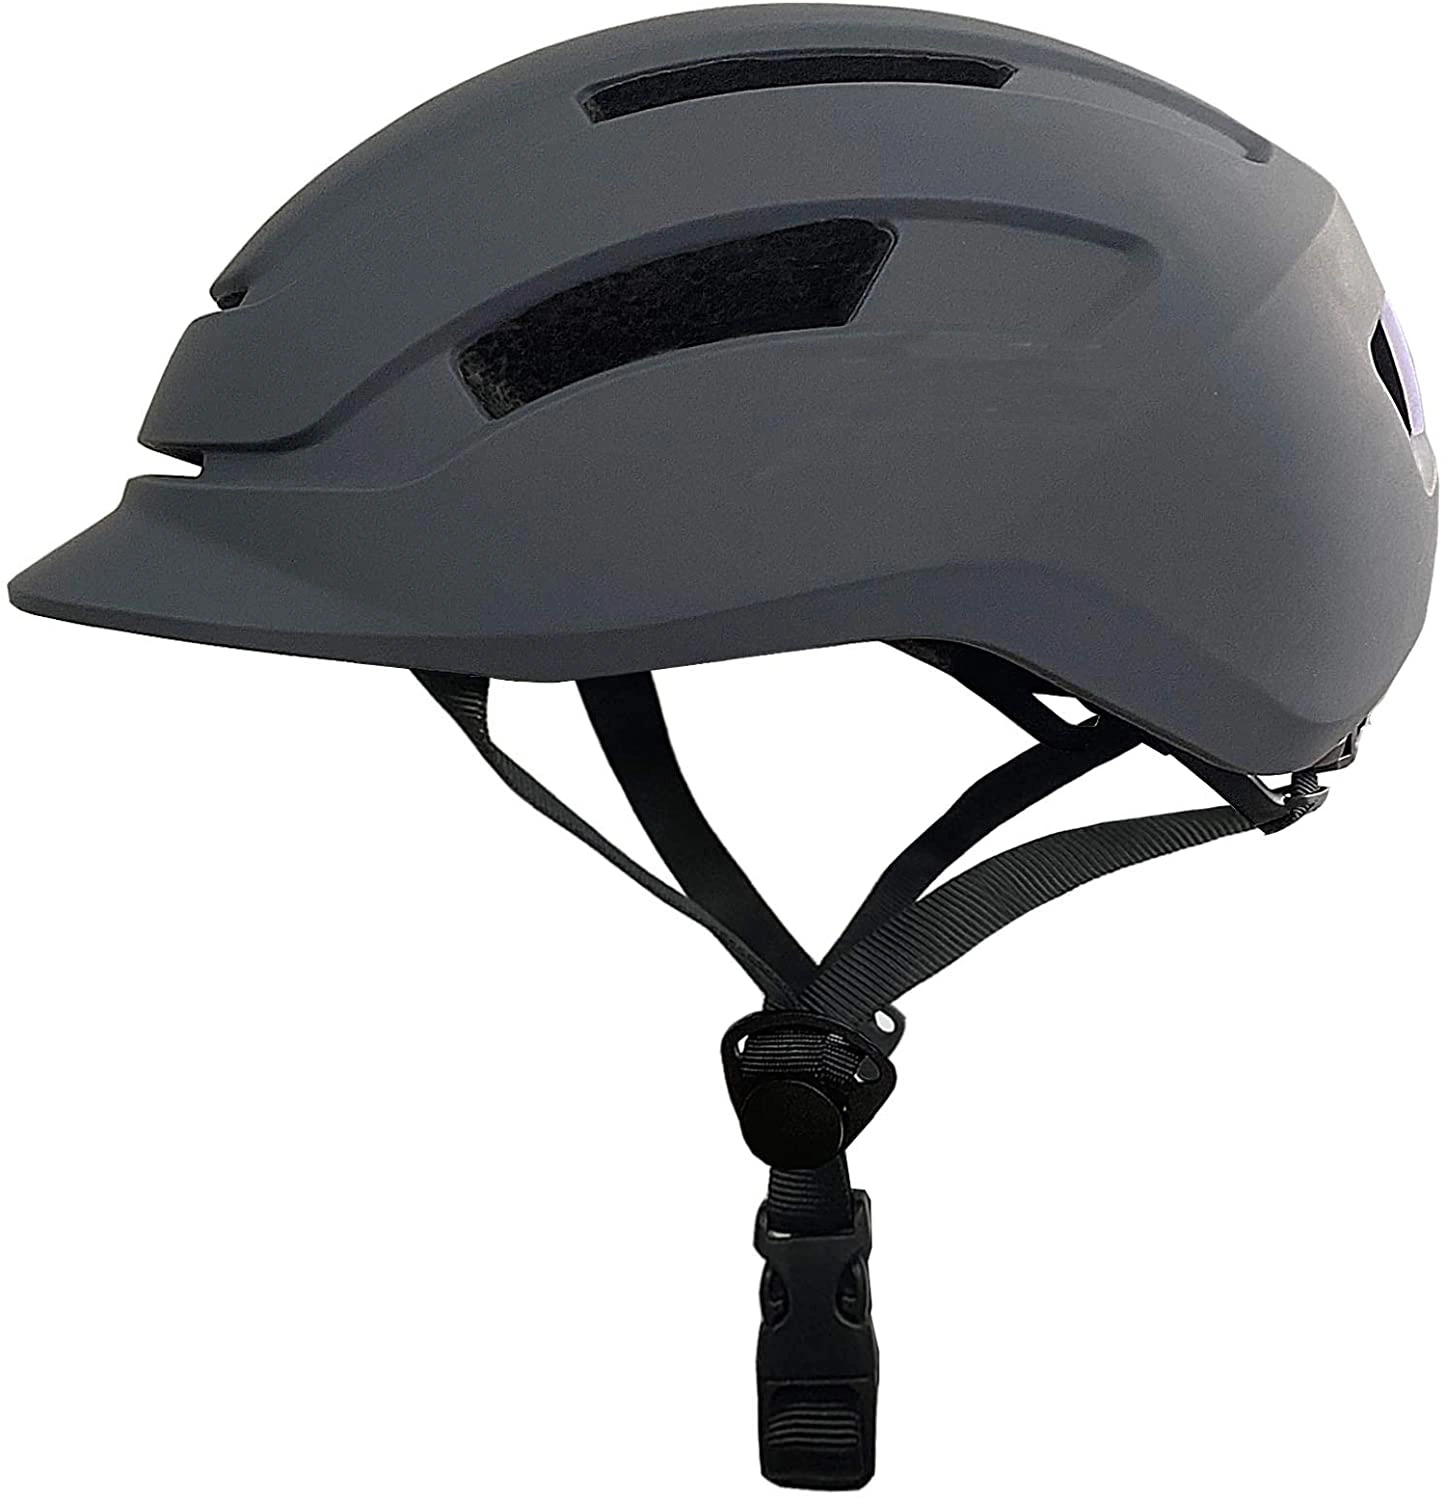 Adultos personalizado cascos de bicicleta de montaña, casco para bicicleta MTB de ciclismo de carretera Kids cascos de bicicleta con luz LED